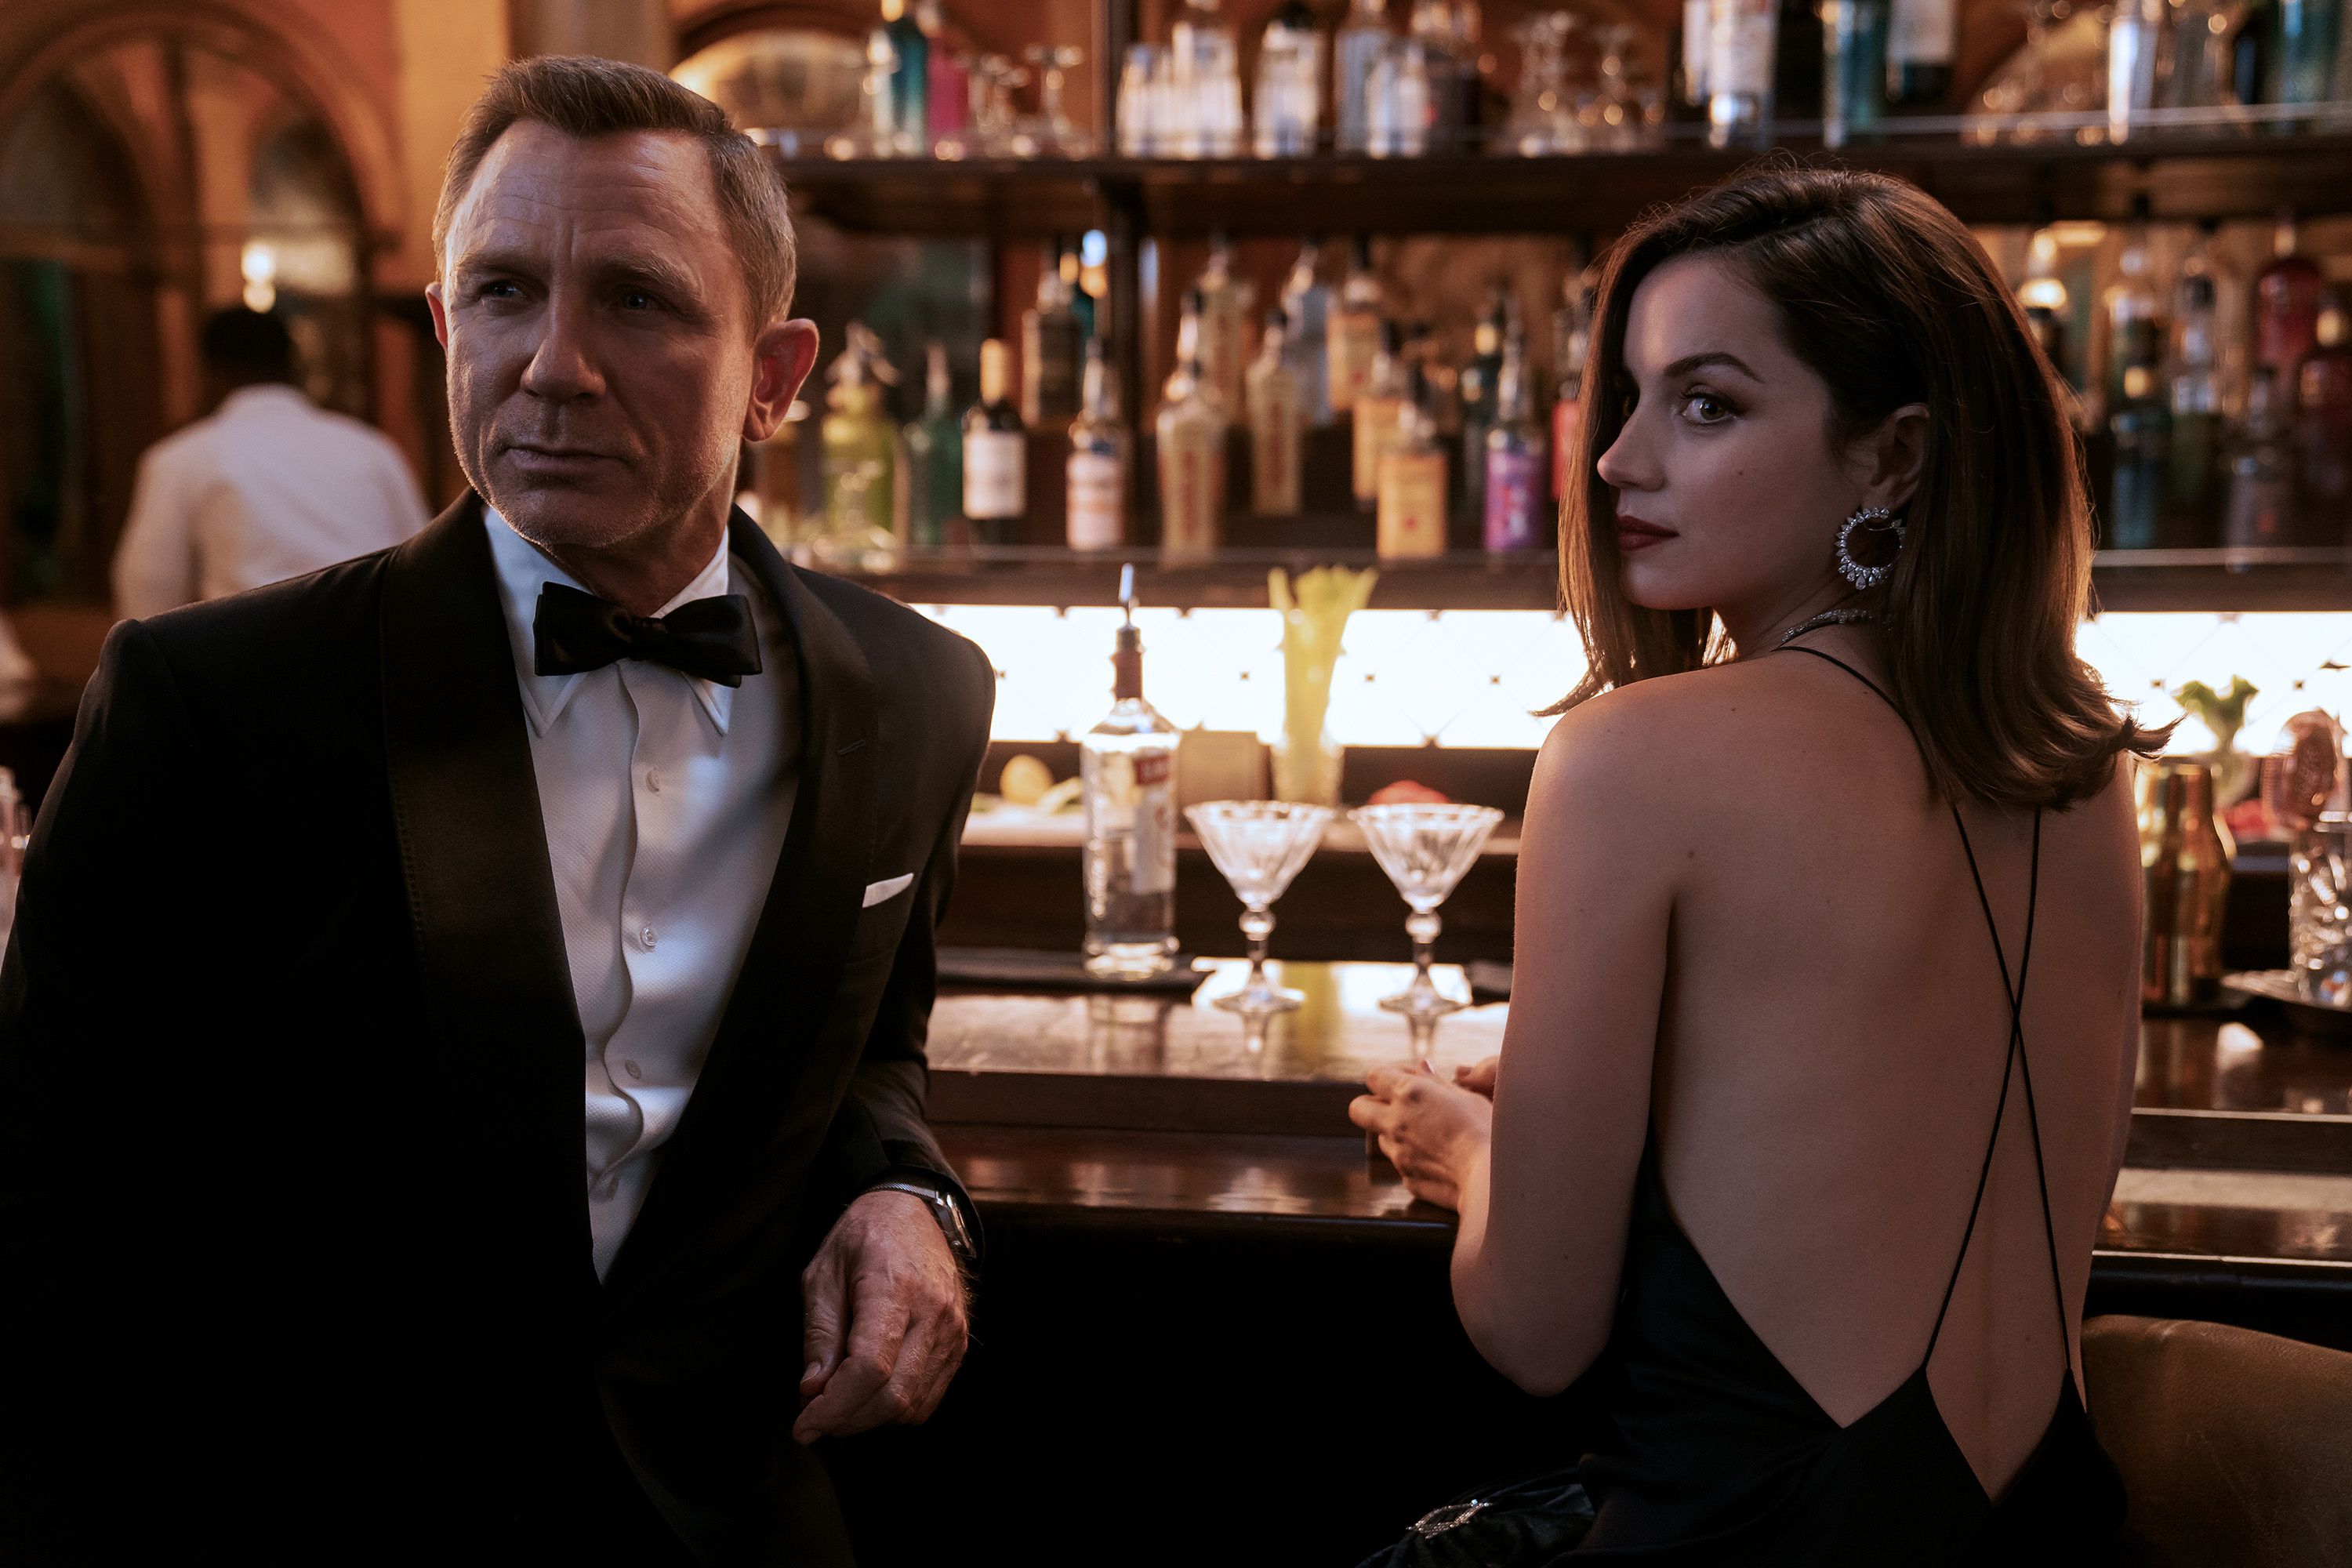 Bond Girl Ana de Armas looks stunning in black midi dress while